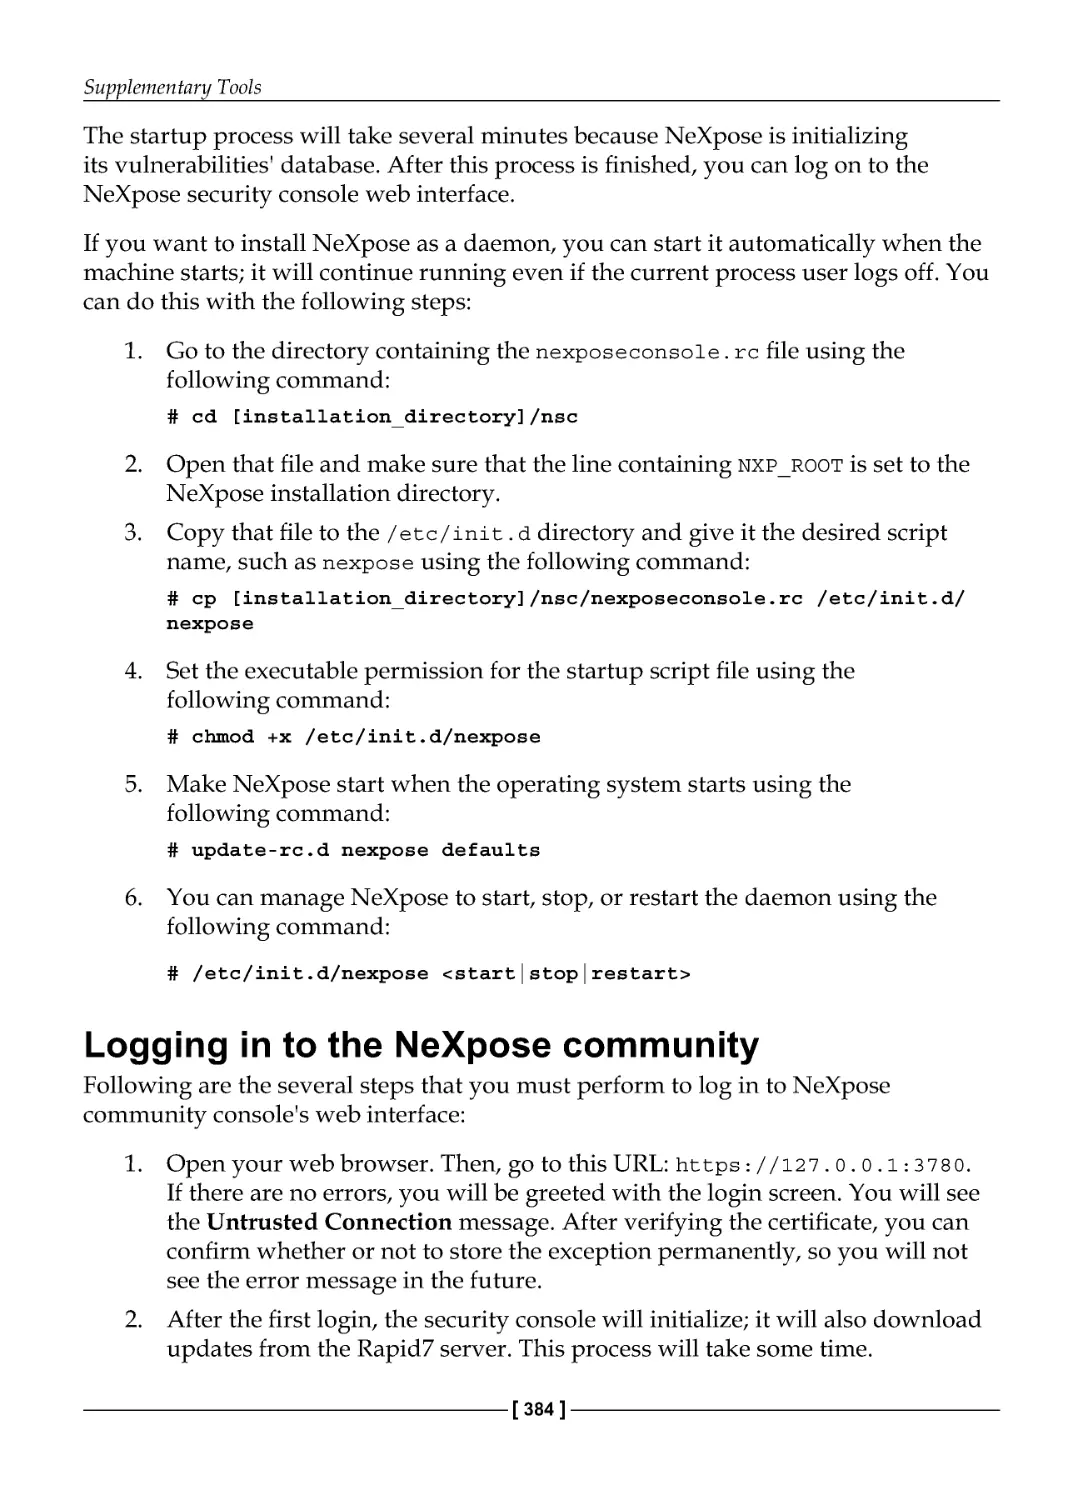 Logging in to the NeXpose community